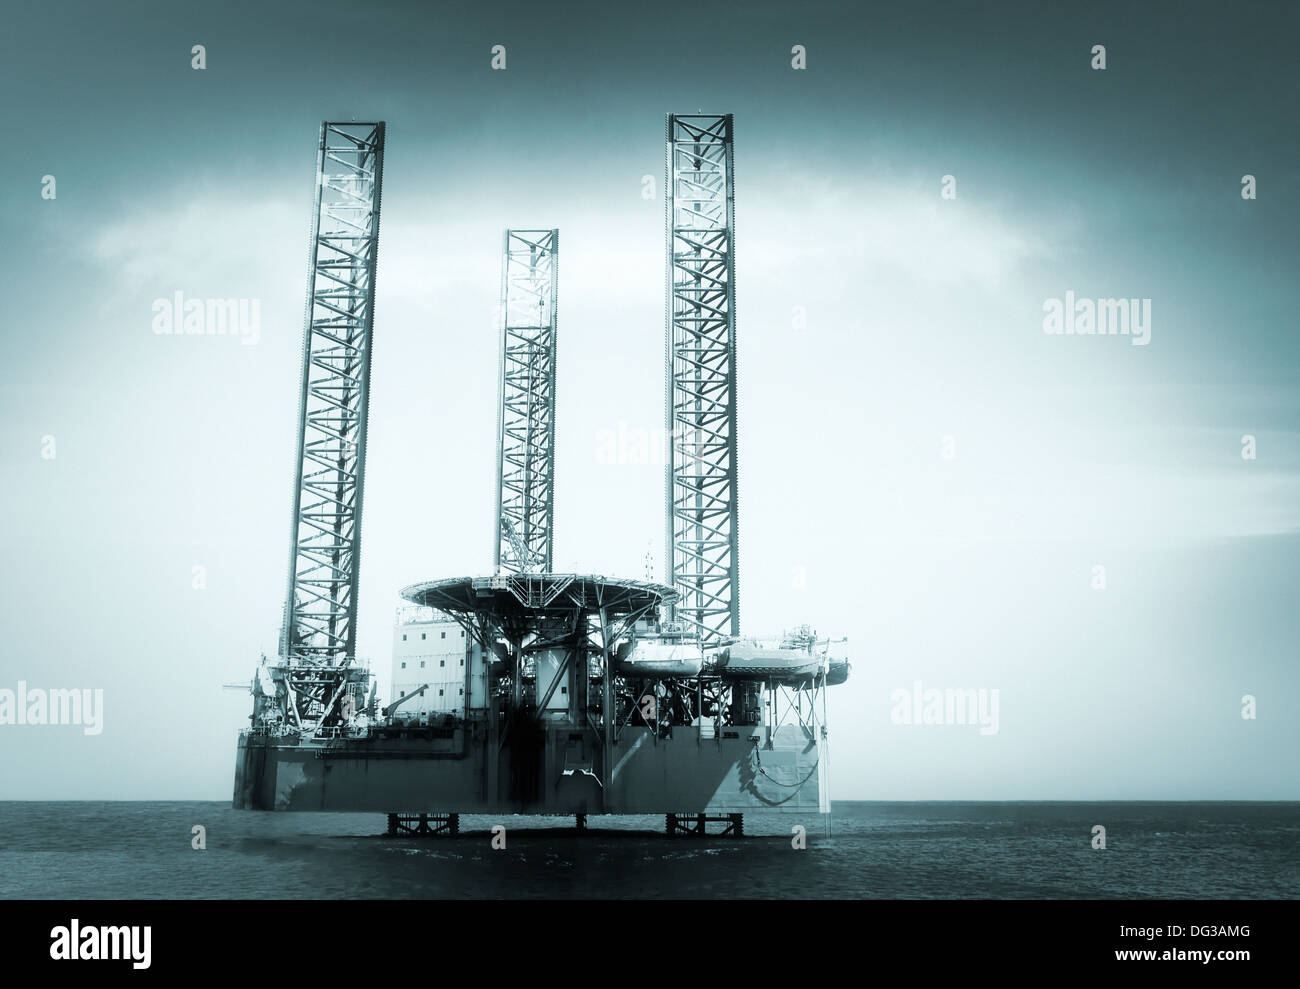 offshore oil drilling platform Stock Photo